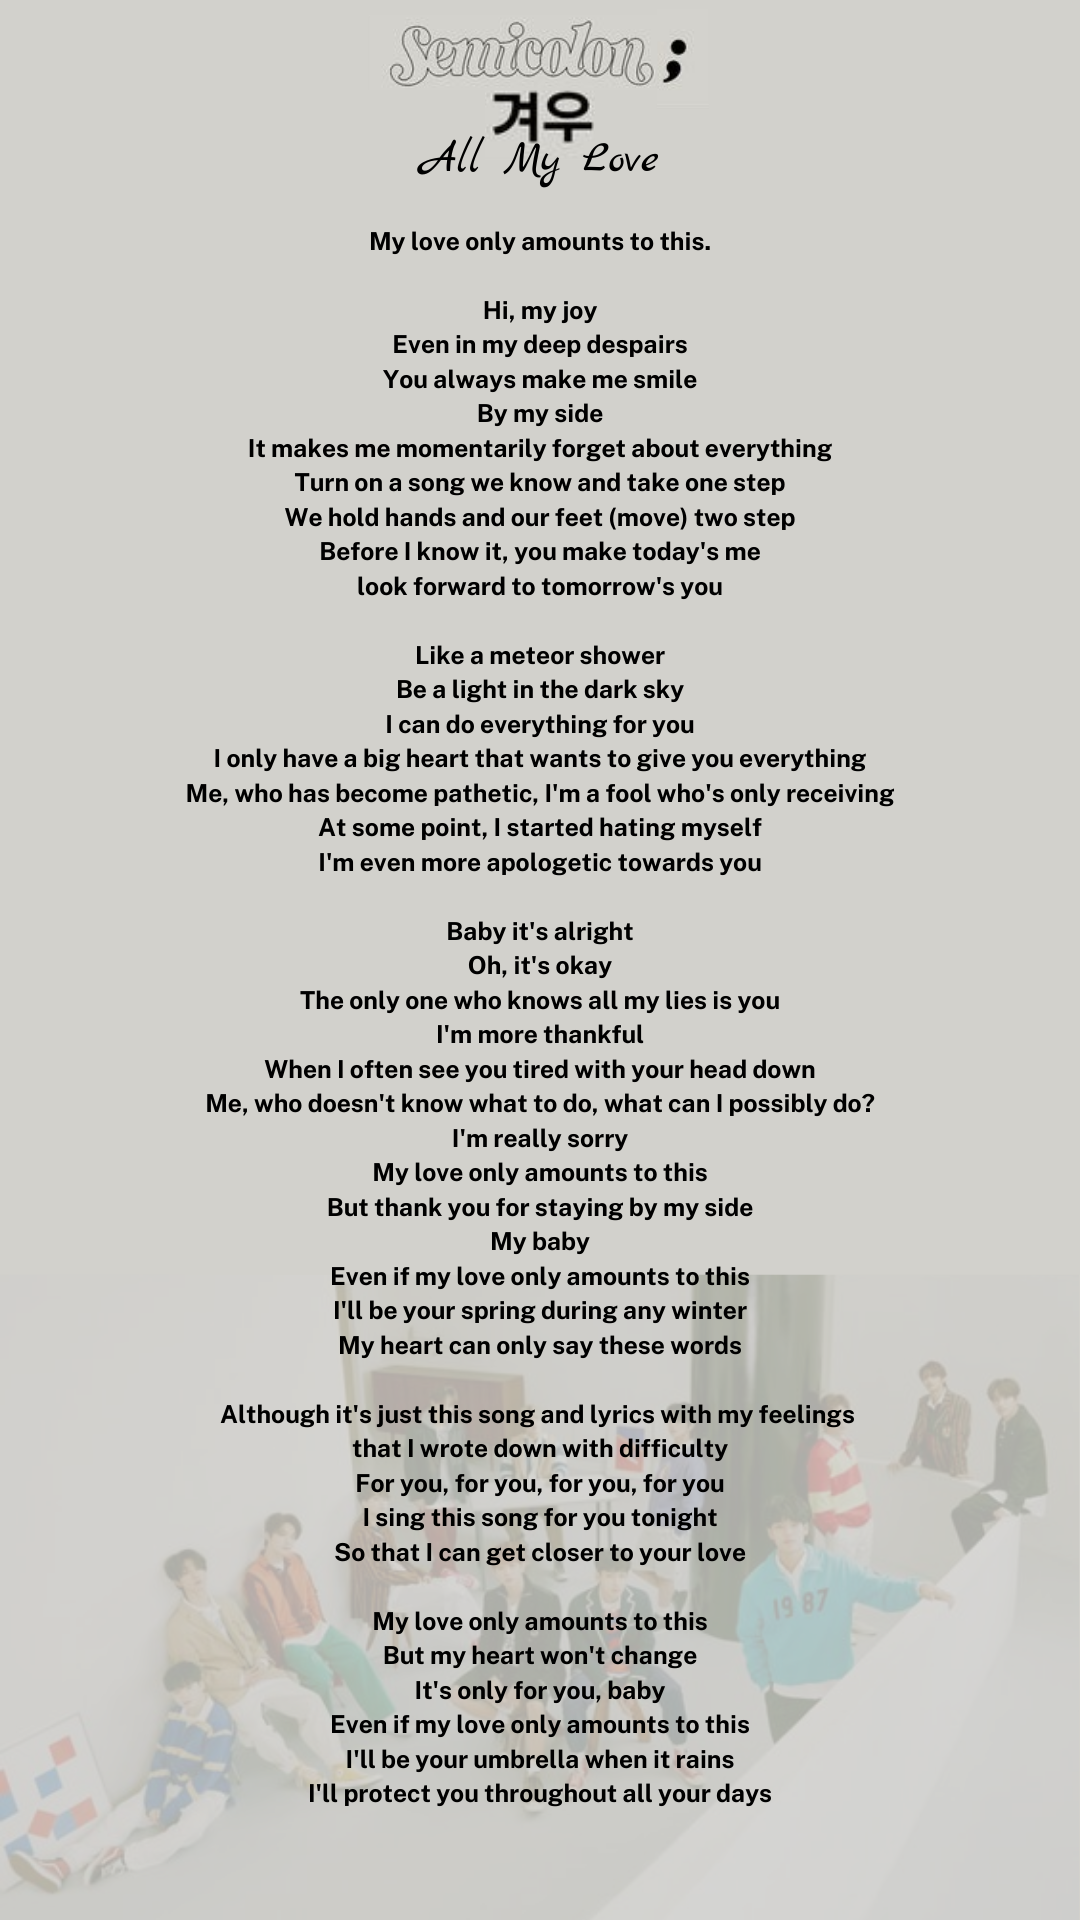 All My Love” Lyrics Analysis – A Carat's Journey